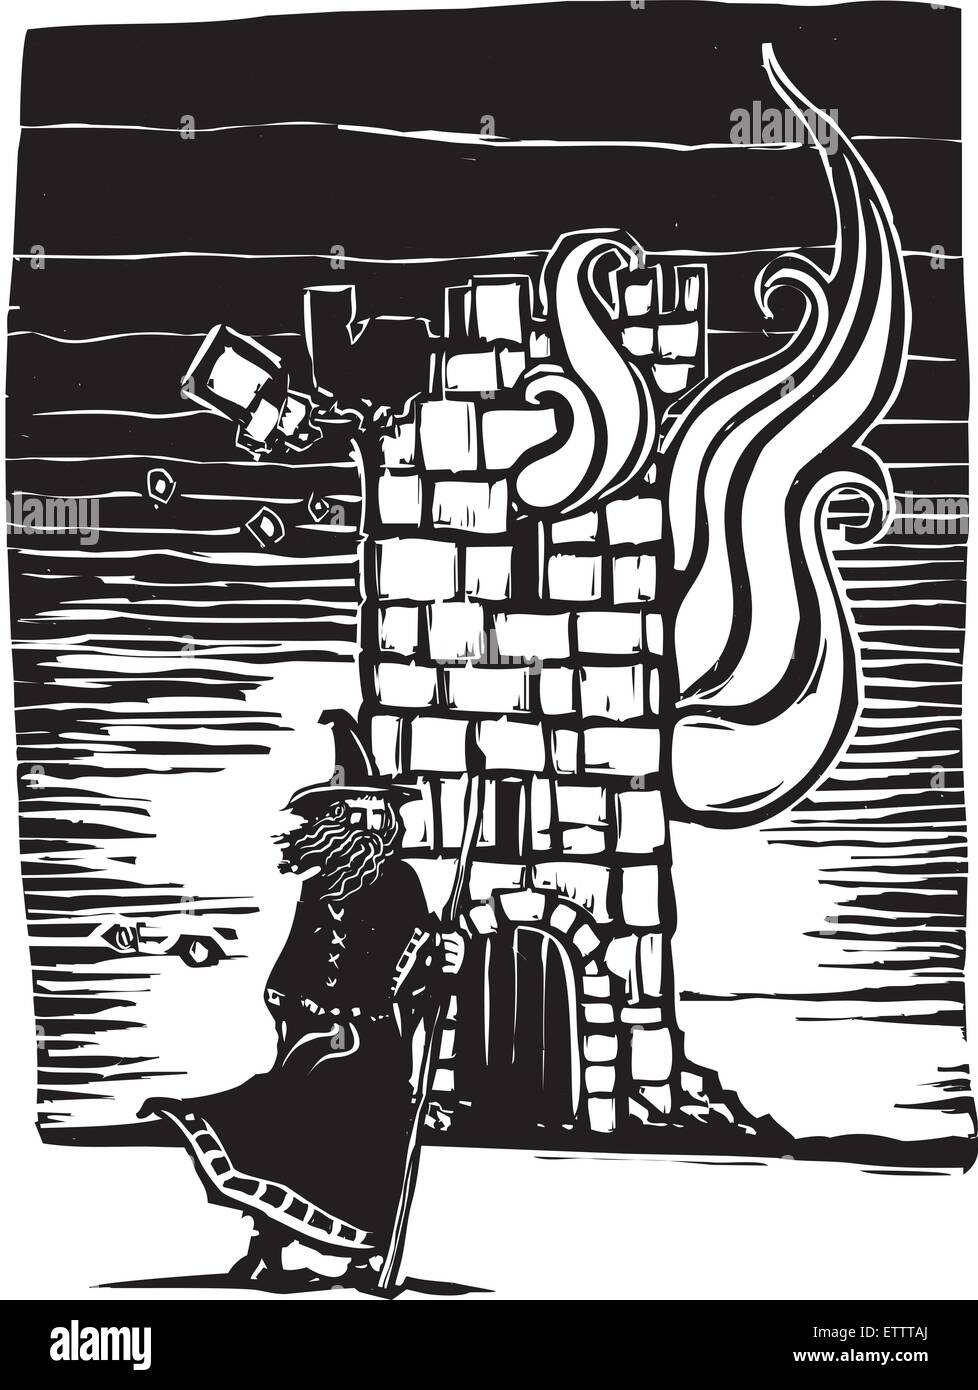 Holzschnitt-Stil Bild eines Zauberers vor brennenden Schlossturm steht. Stock Vektor